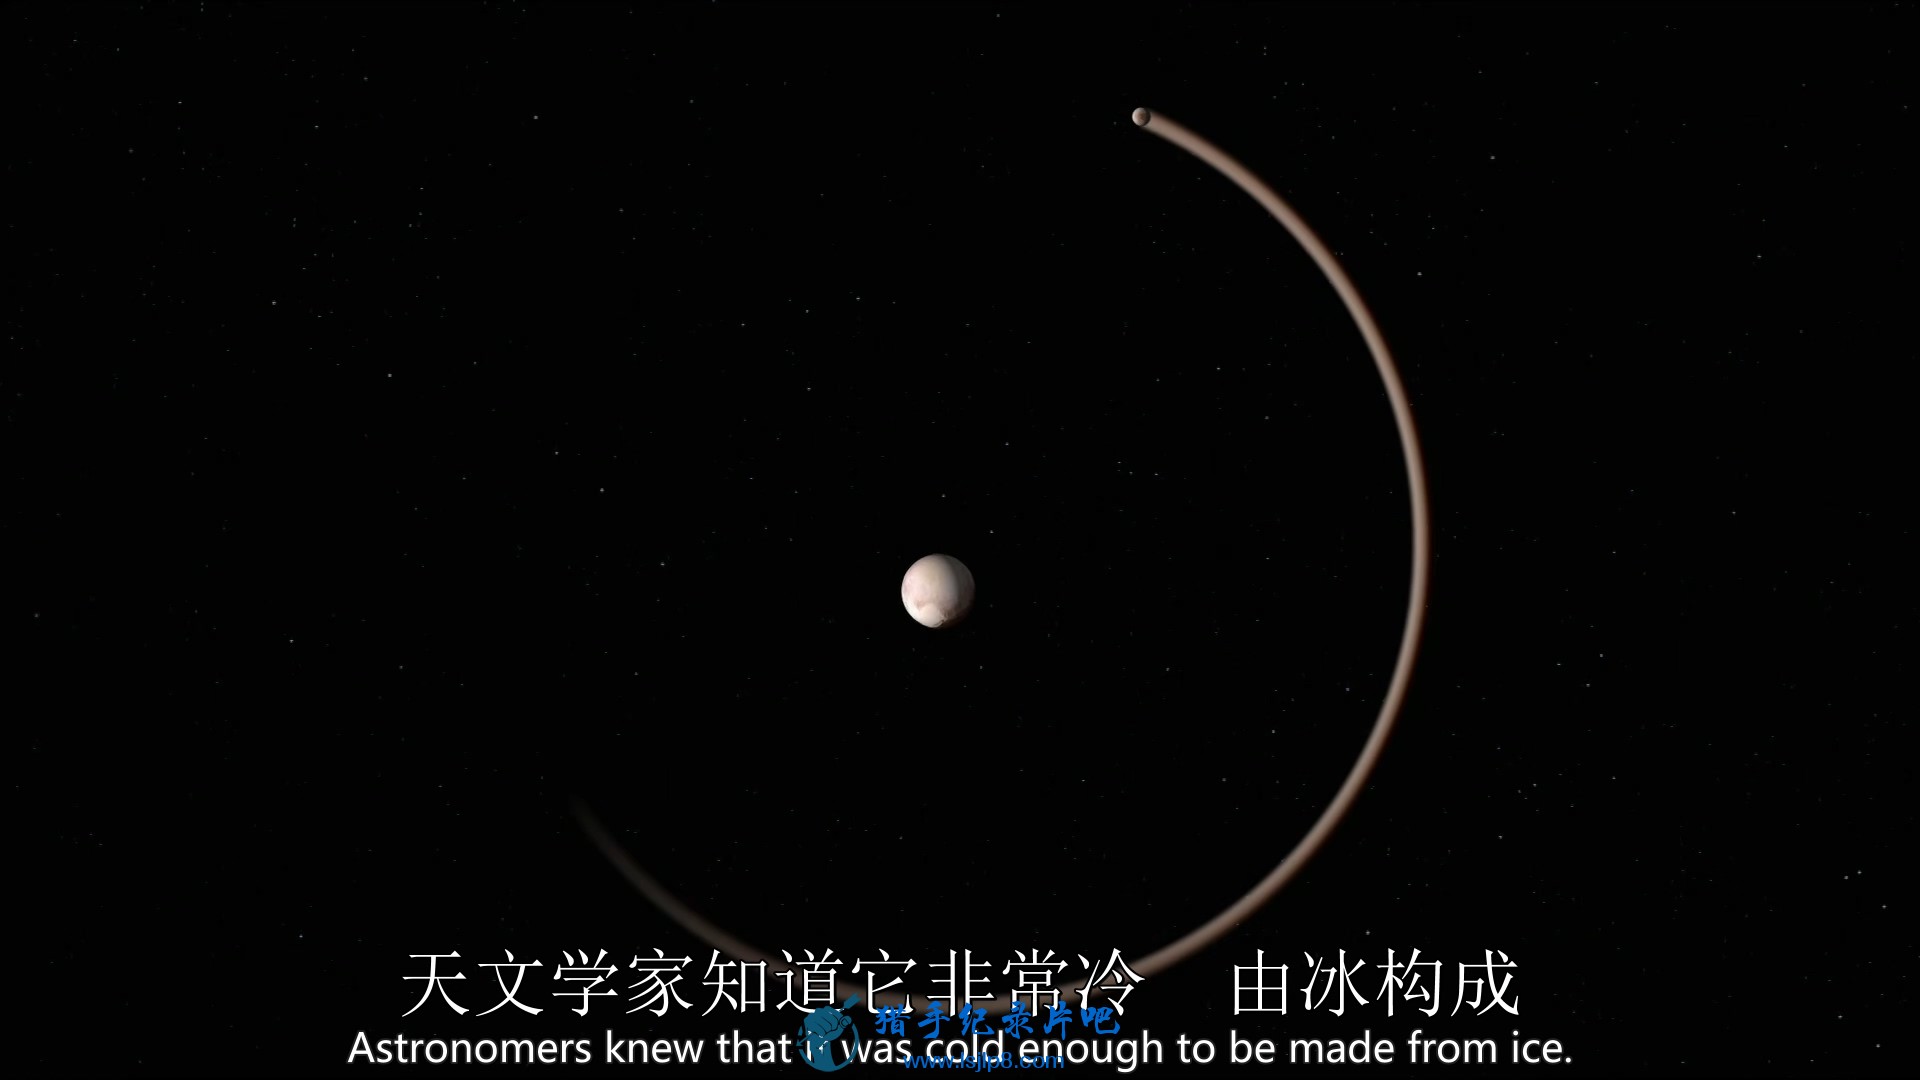 BBC.Horizon.2020.Pluto.Back.From.the.Dead.1080p.HDTV.x265.AAC.MVGroup.org.mkv_20.jpg